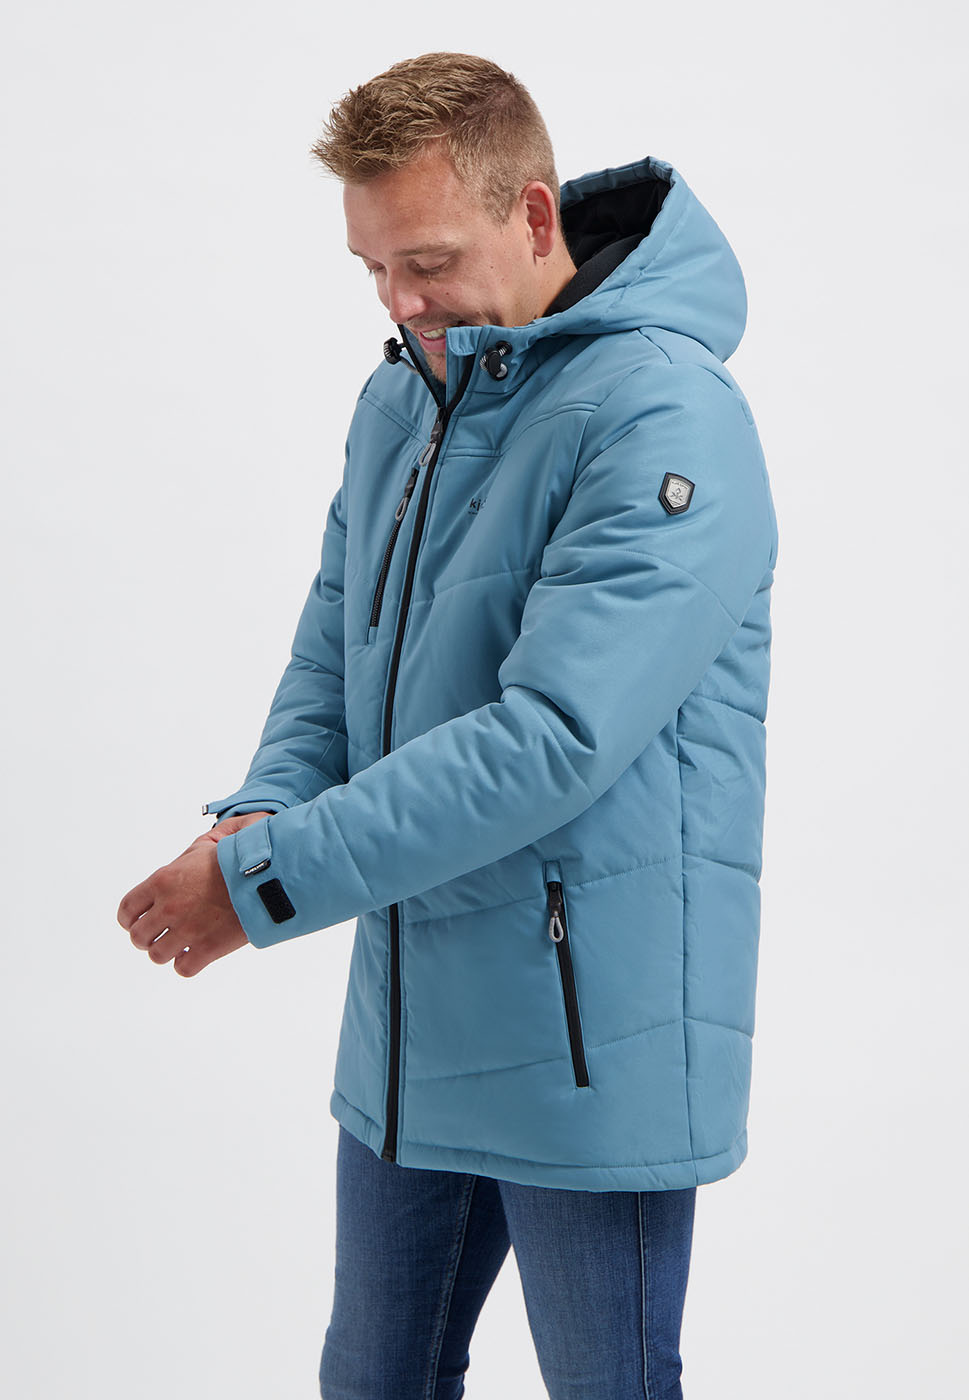 Kjelvik Scandinavian Clothing - Men Jackets Wess Light blue